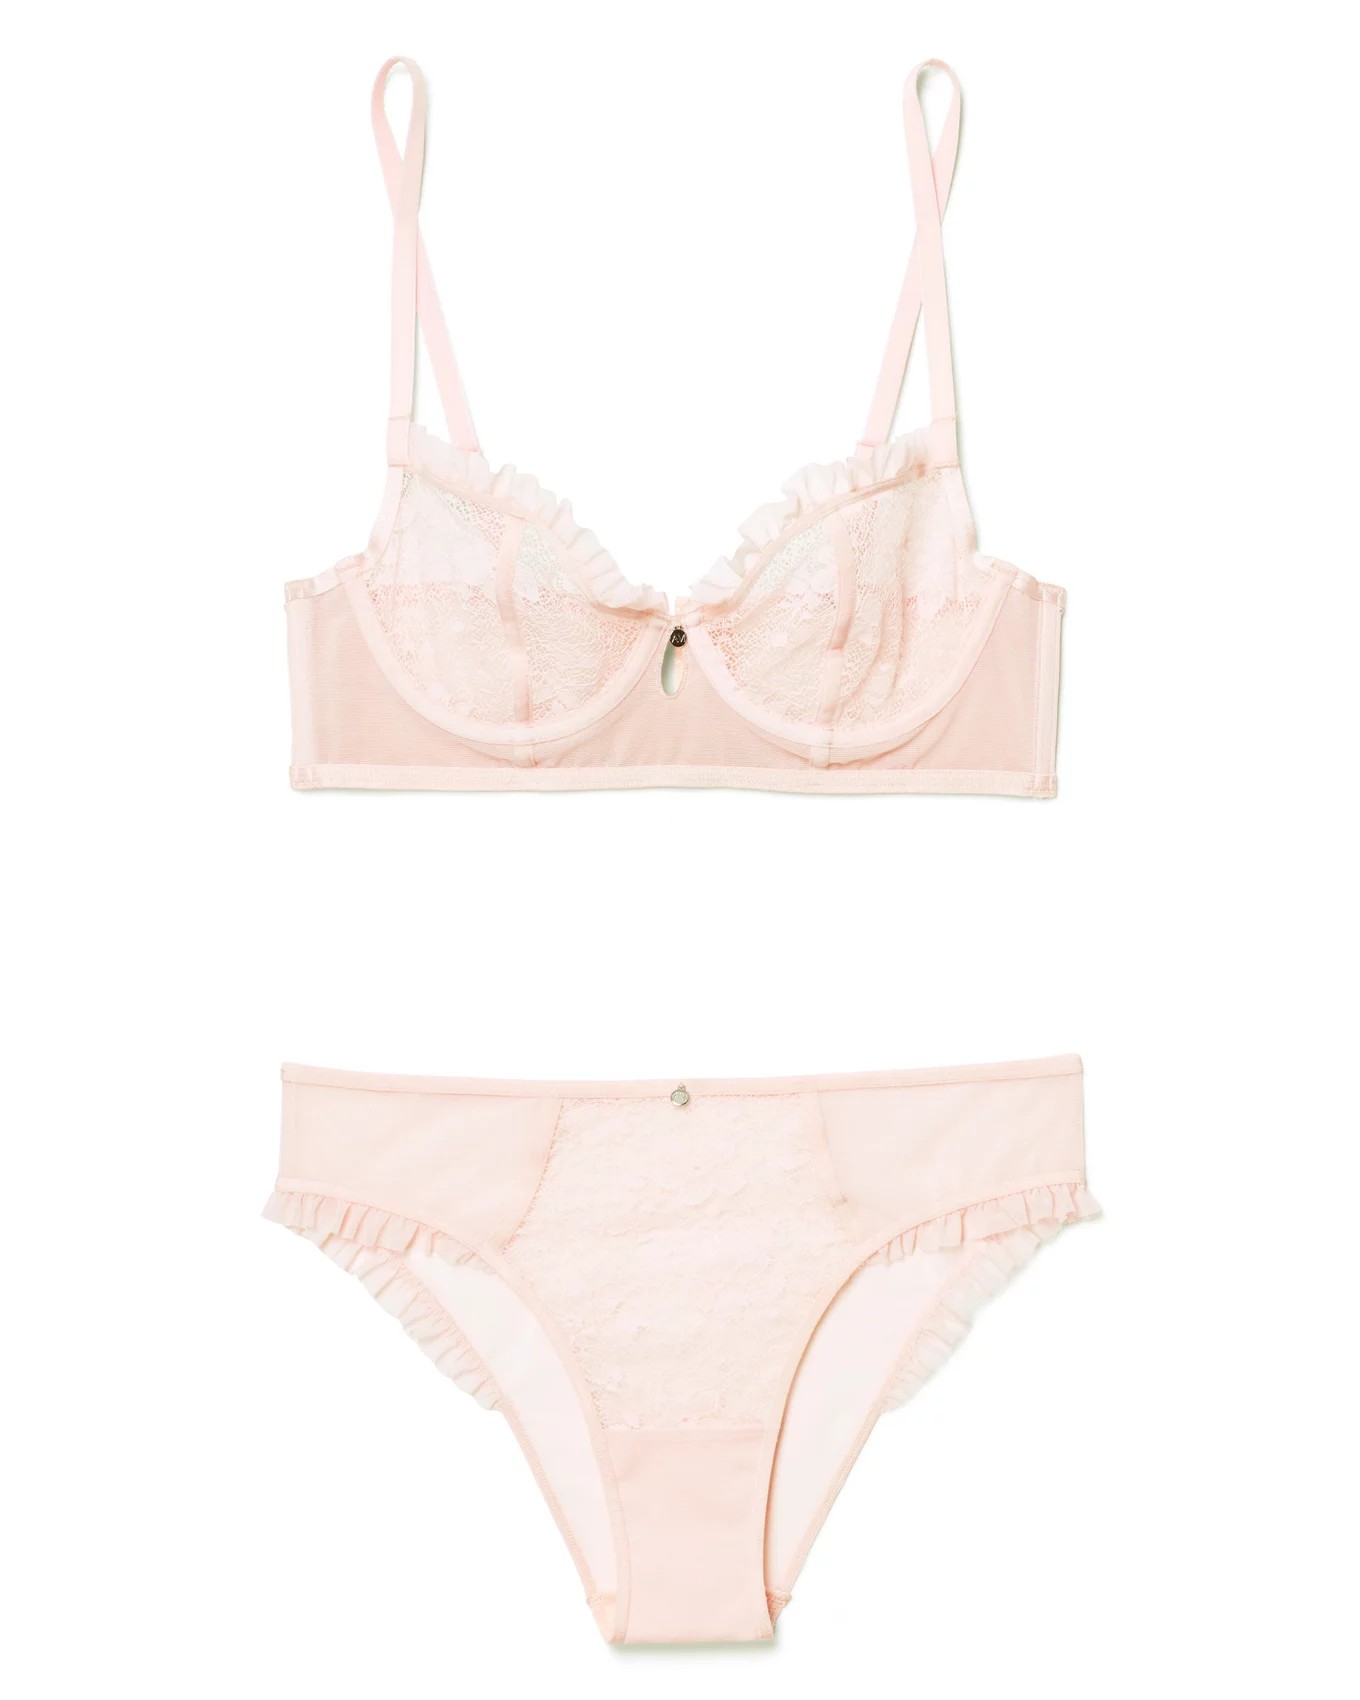 Victoria Secret perfect shape pink bra size 36D like new condition